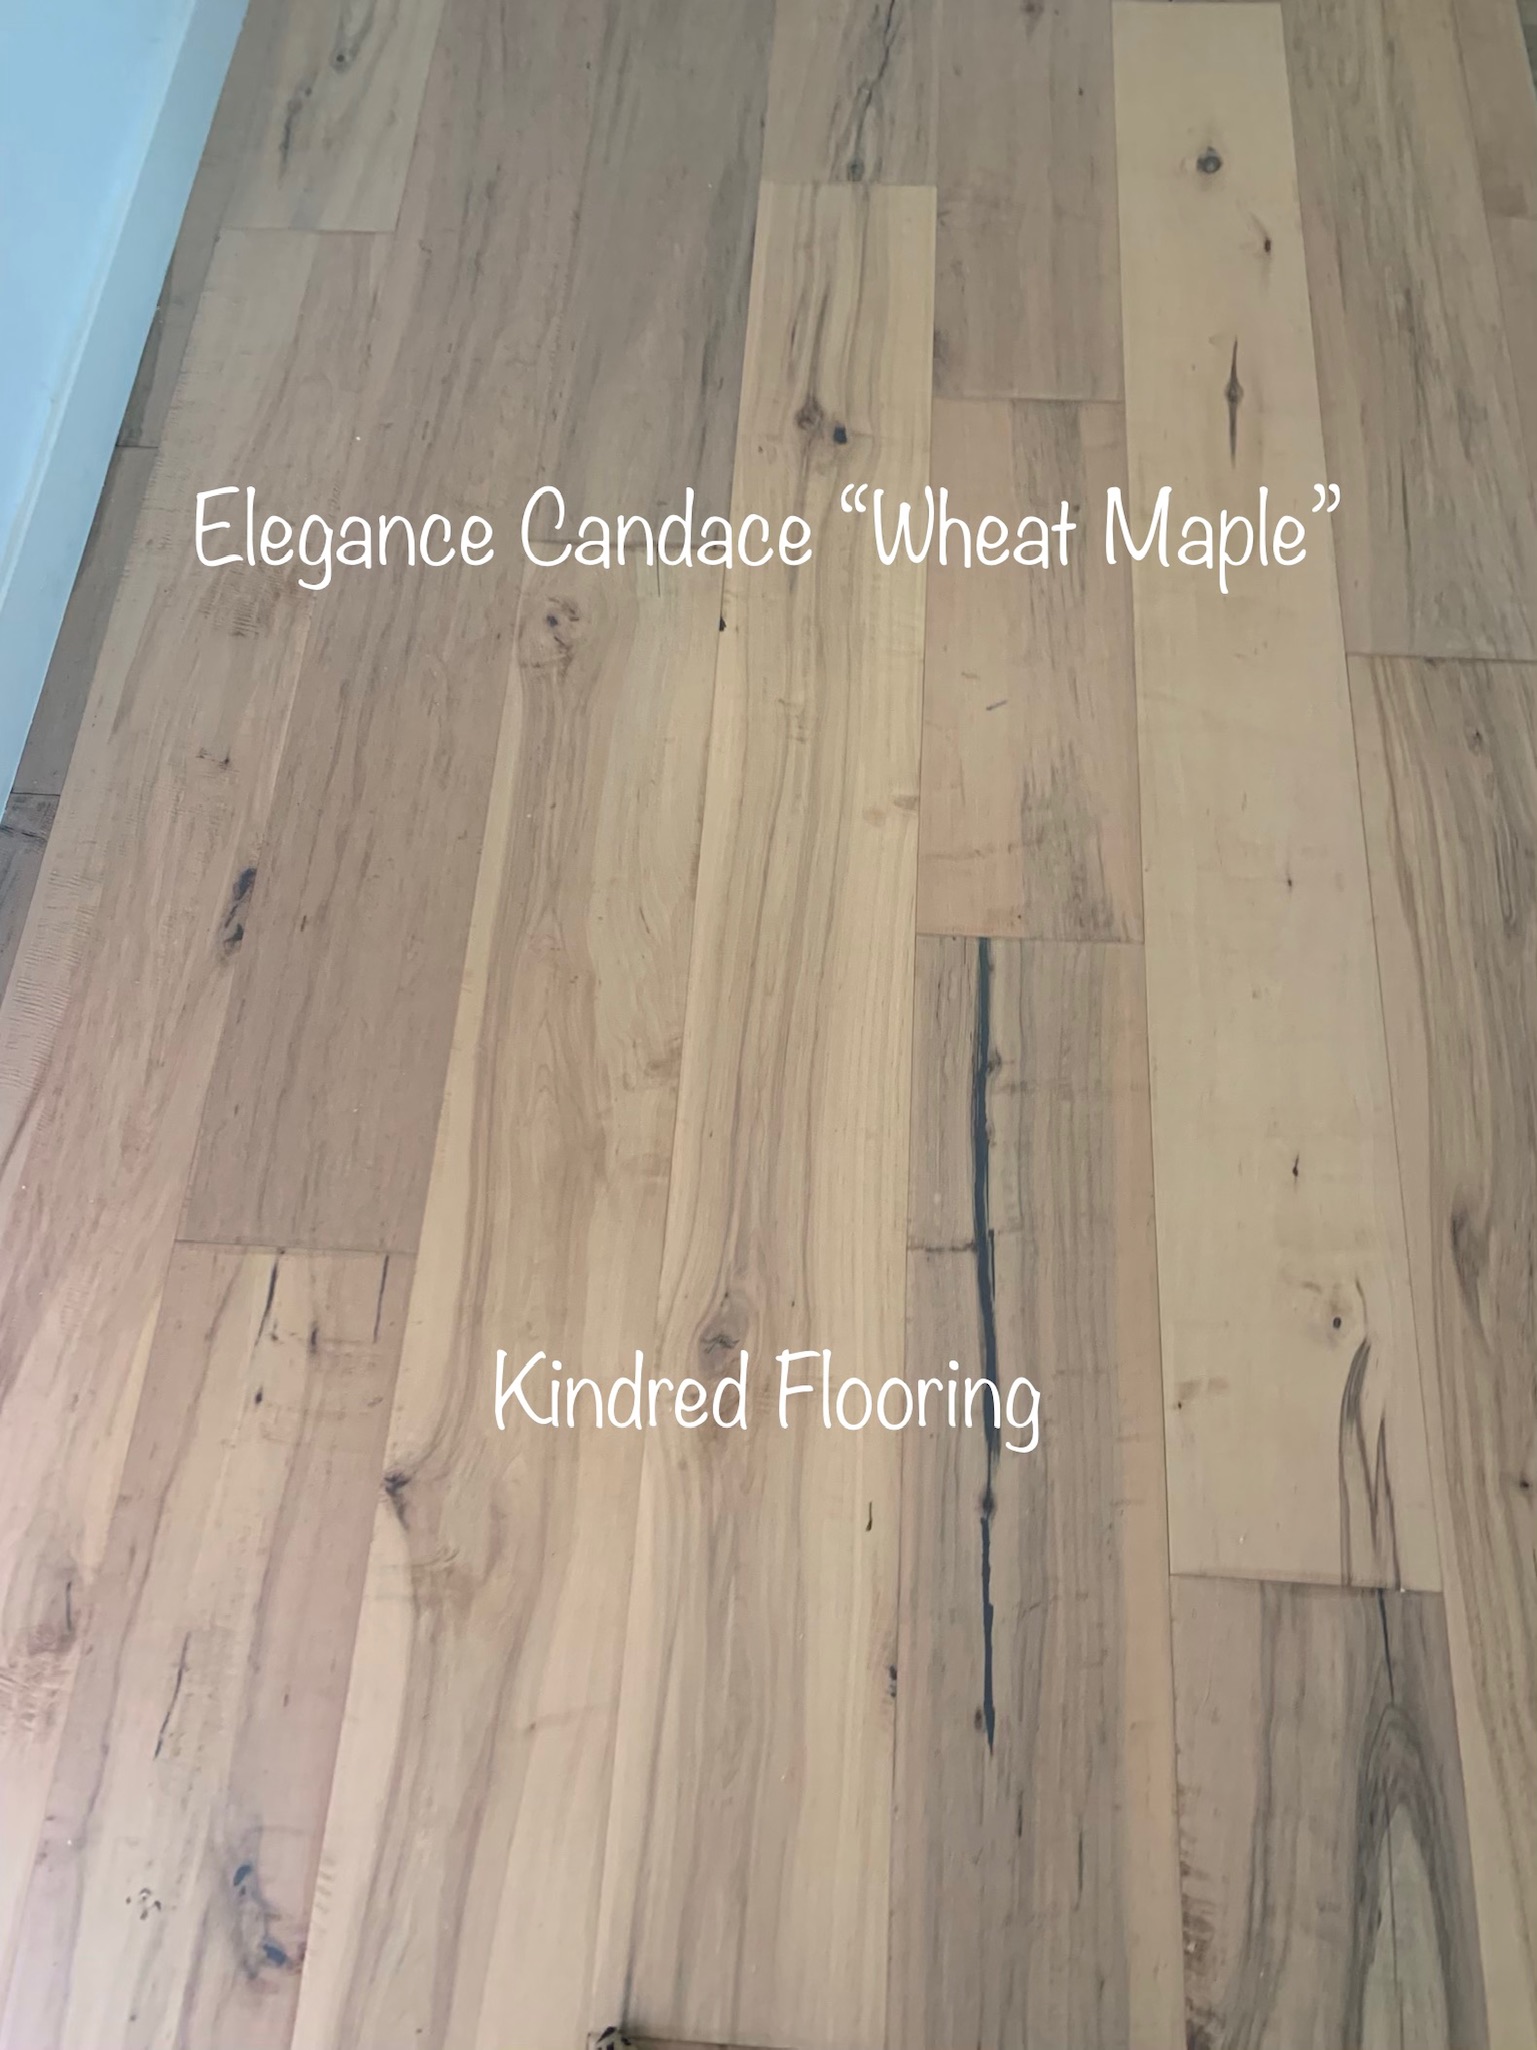 Elegance Candace "Wheat Maple"